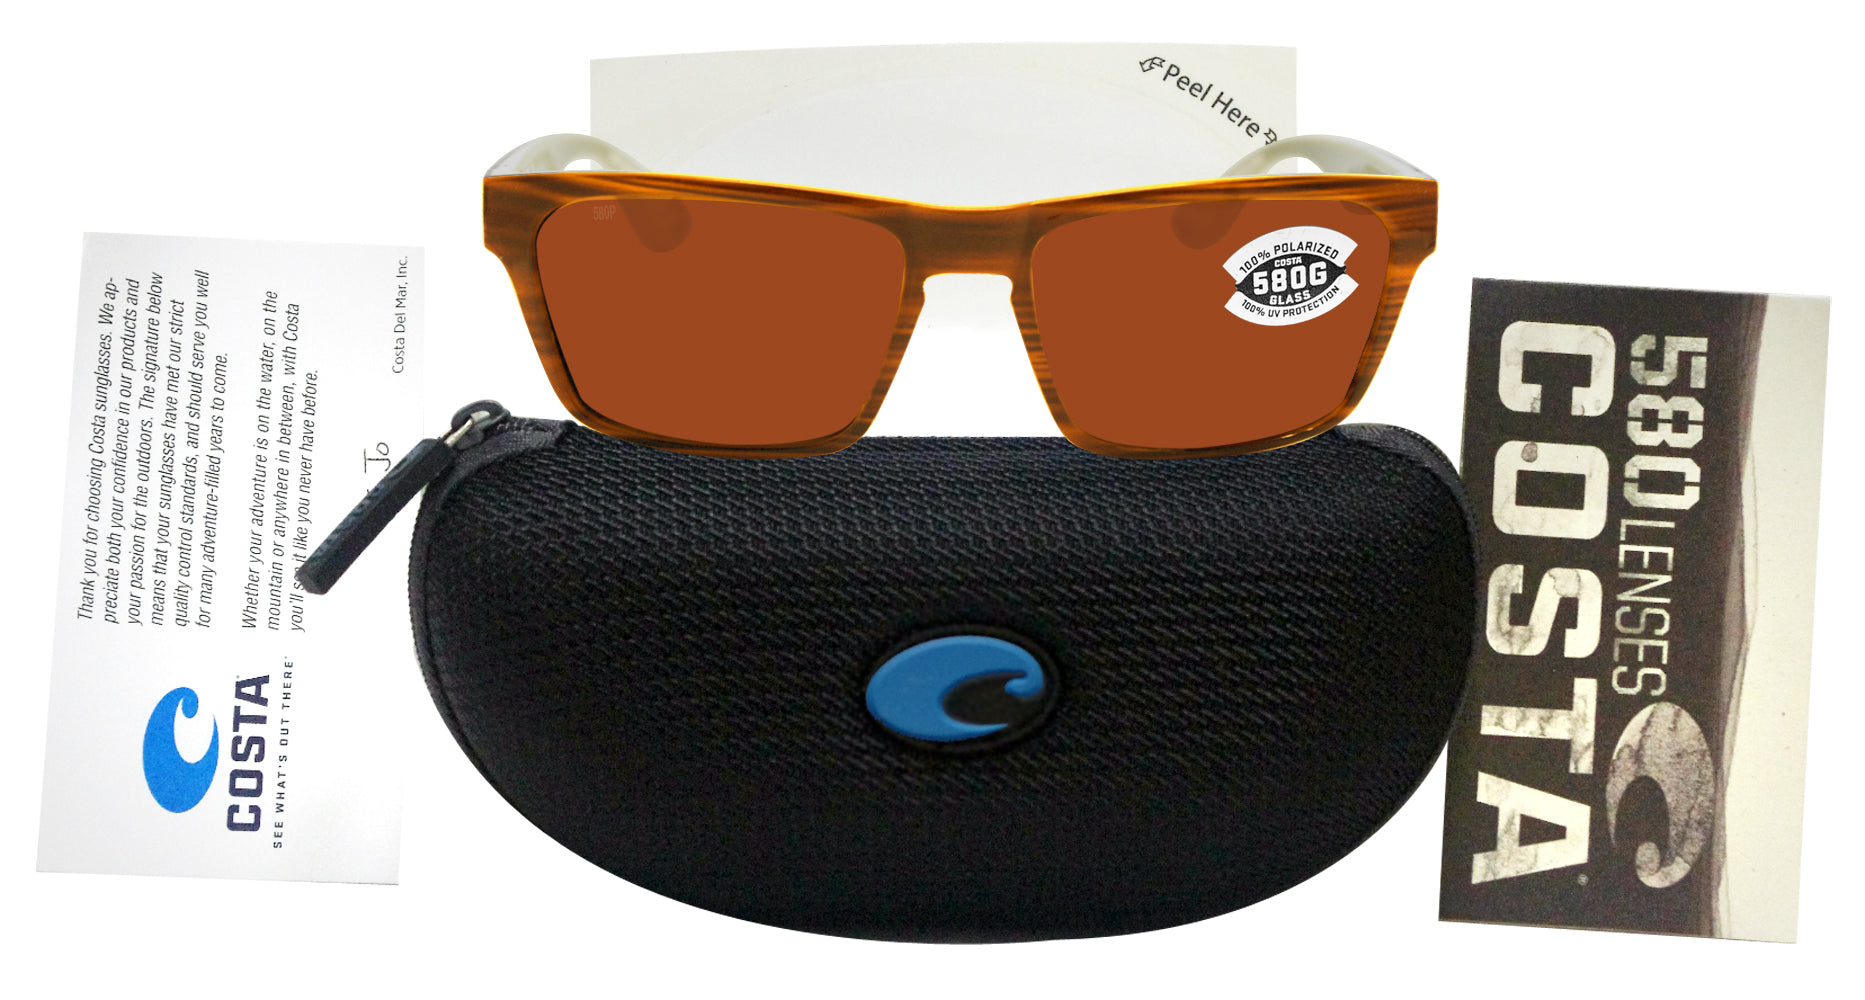 Costa Introduces the Hinano and Copra sunglasses